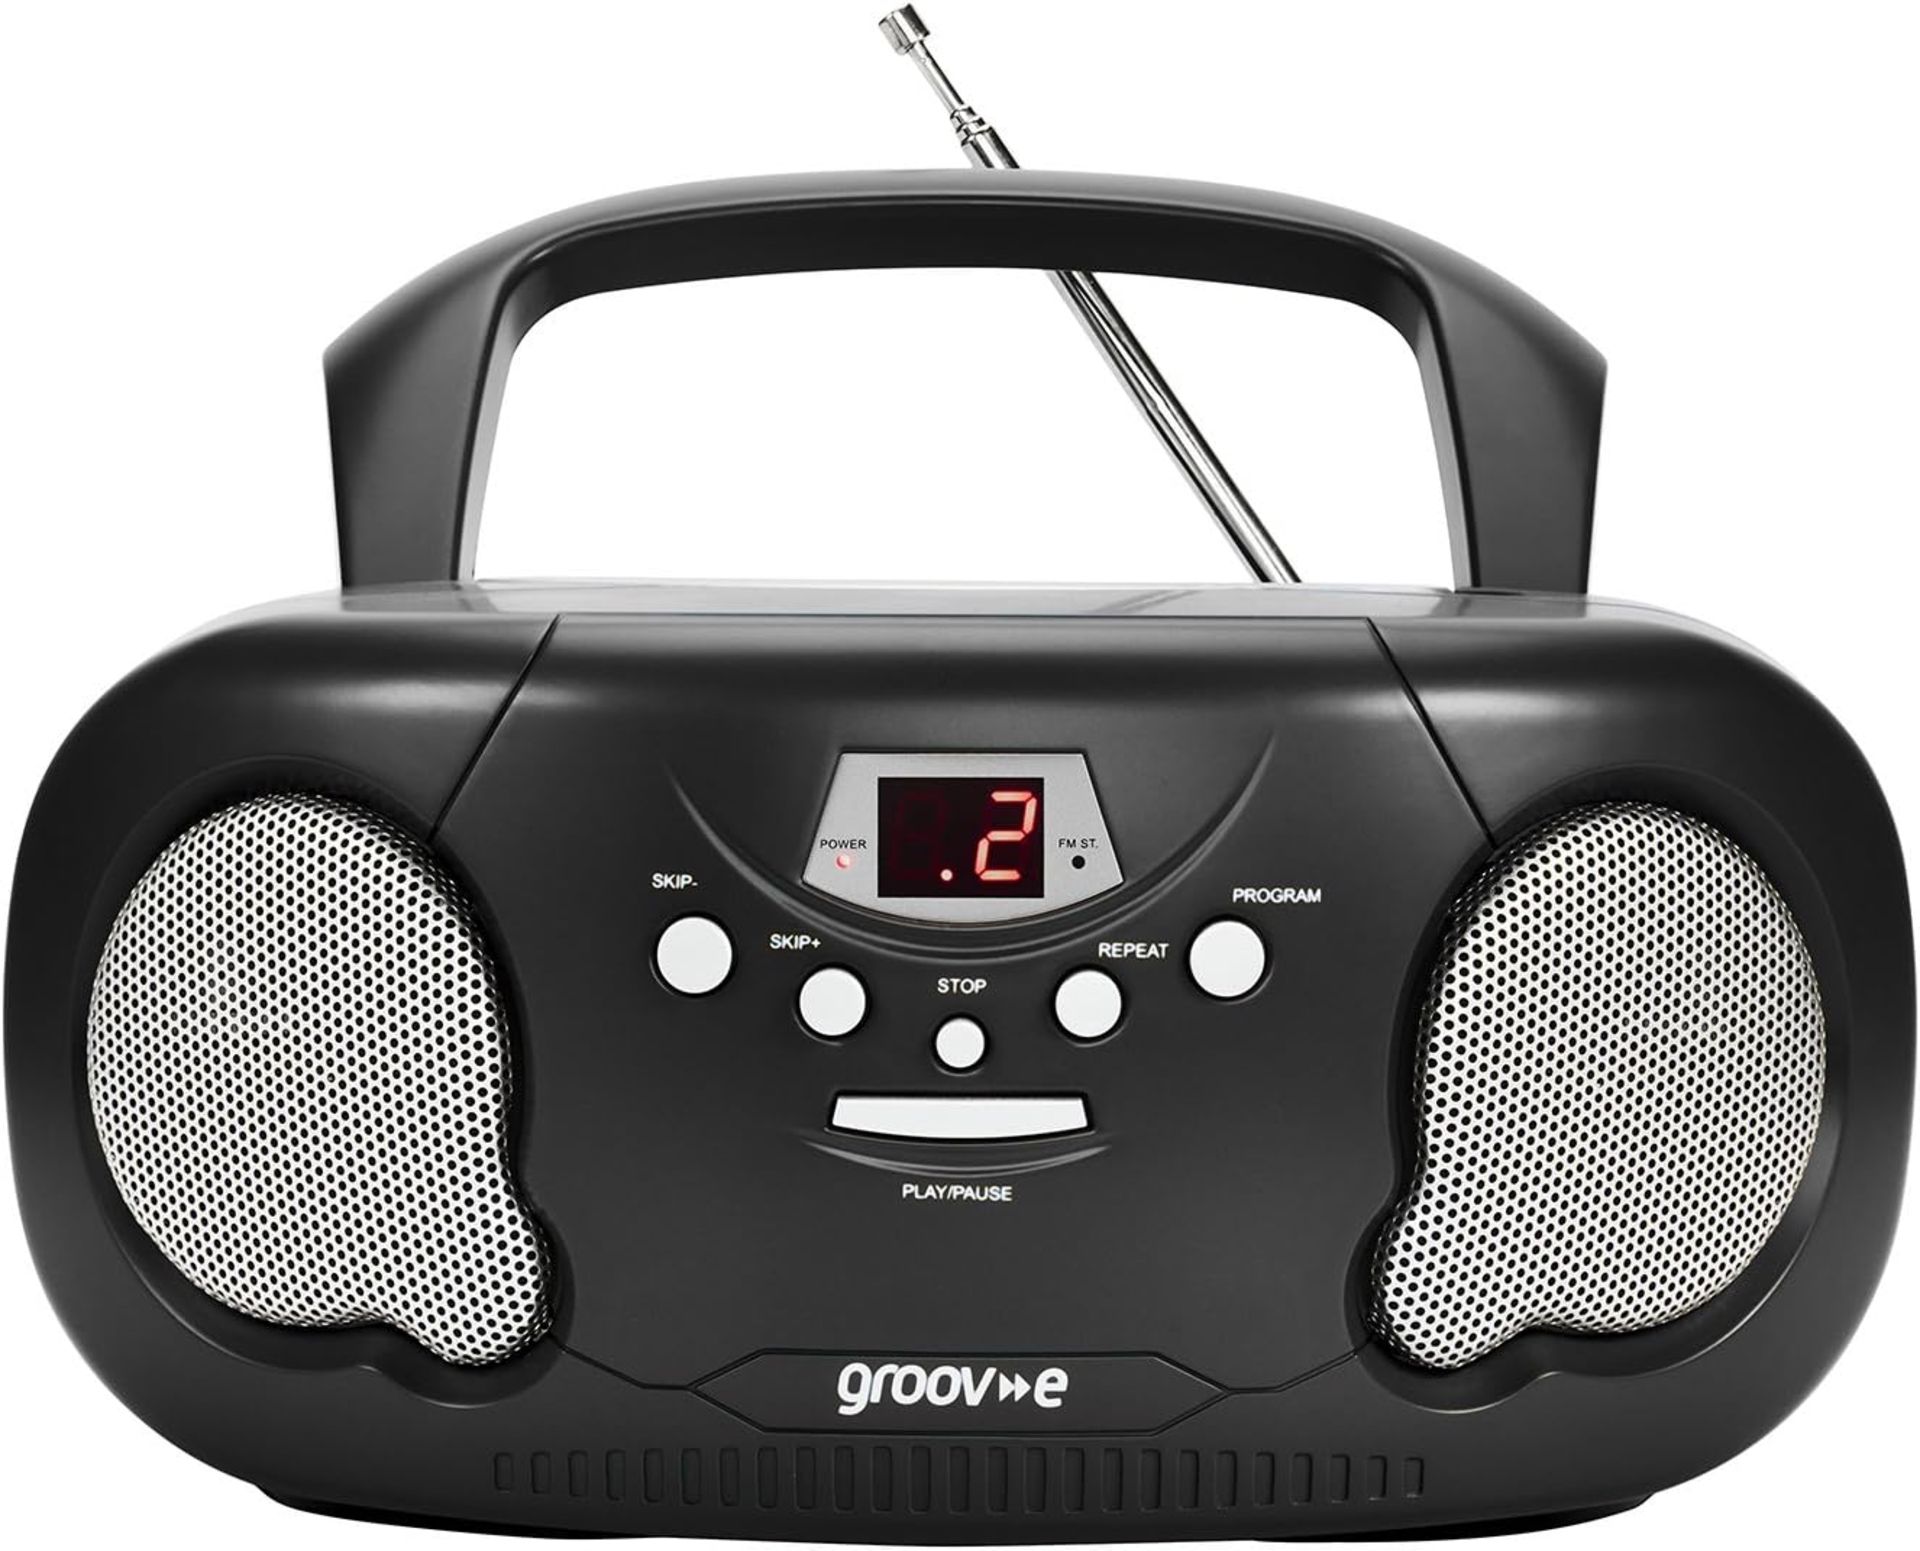 groov e Orginal Boombox - Portable CD Player with Radio, 3.5mm Aux Port, & Headphone Socket - LED